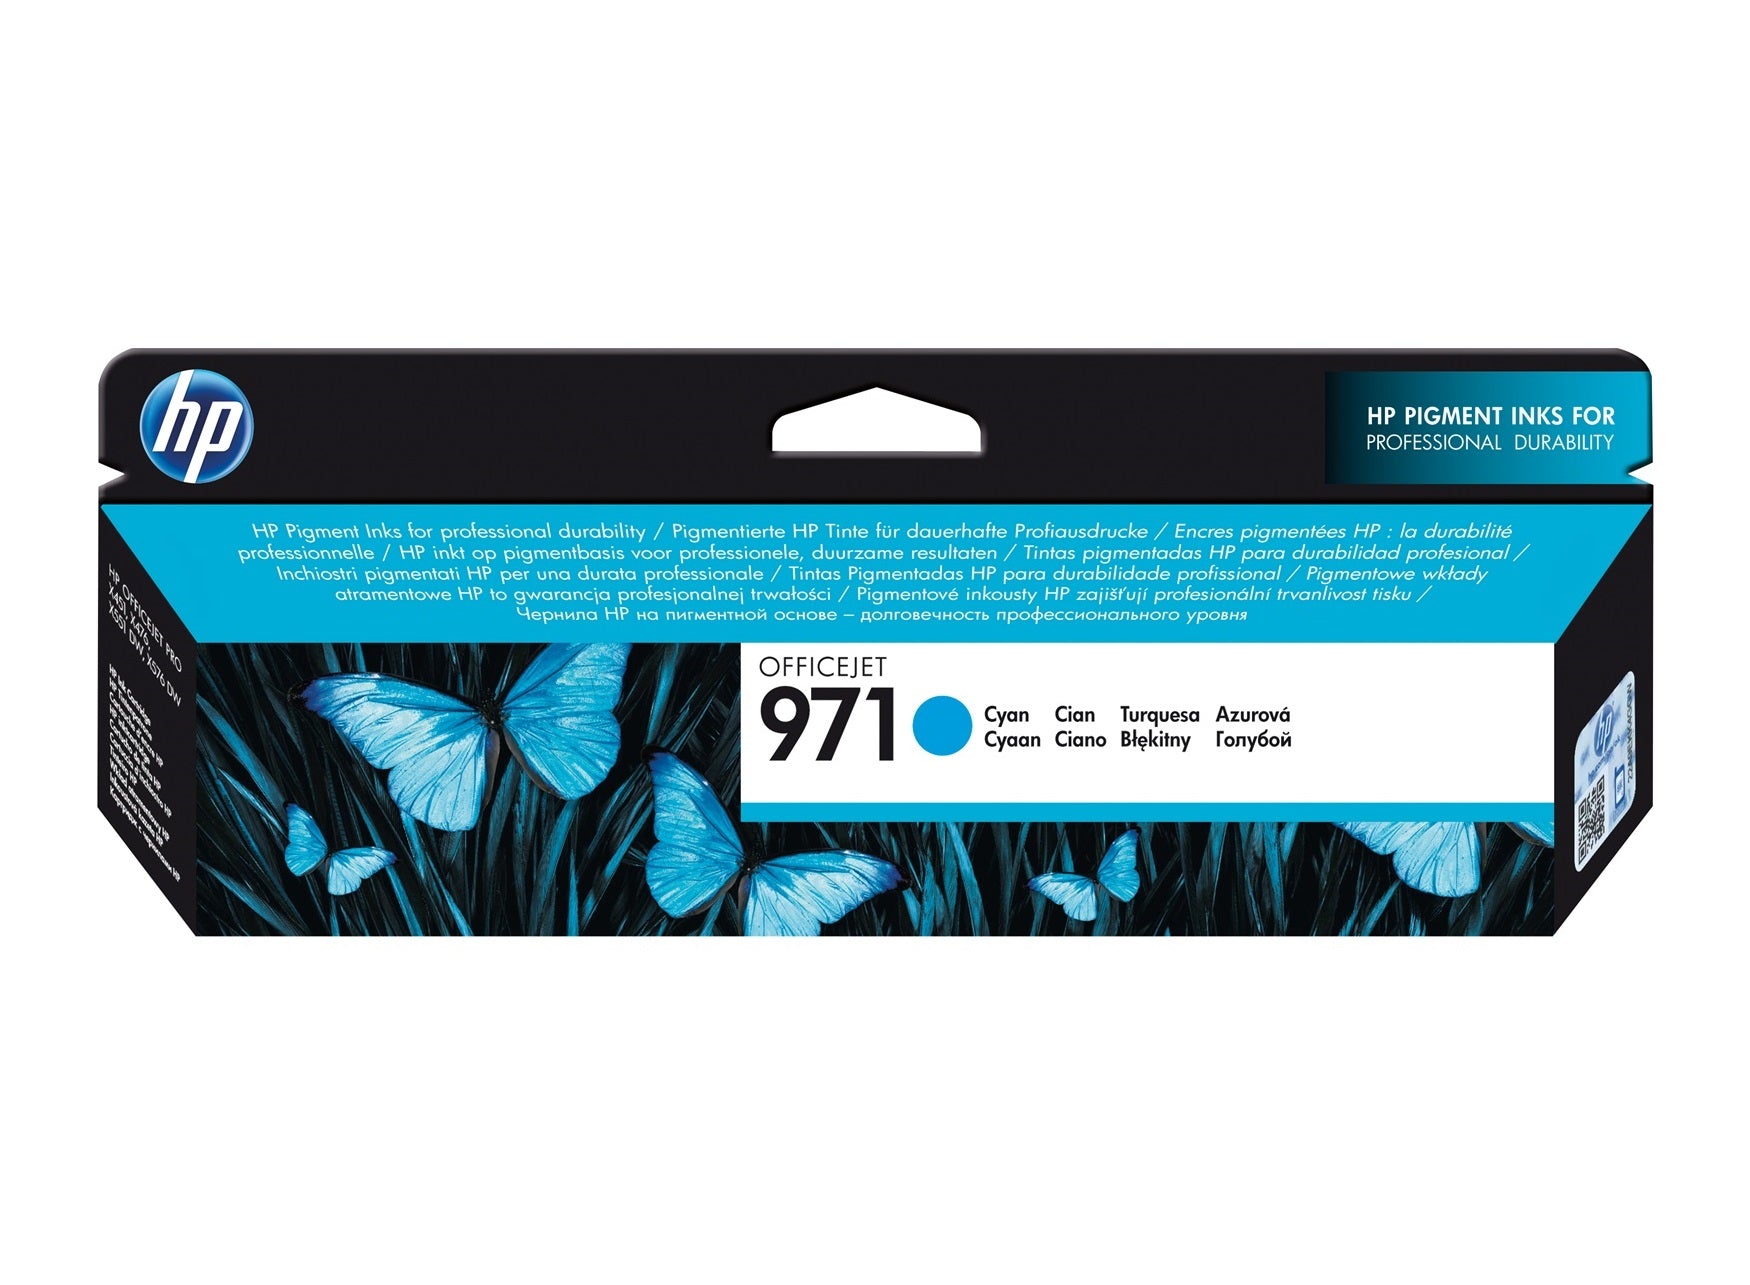 HP 970 Black Ink Cartridge  for HP Officejet Pro X476 X576 Printers